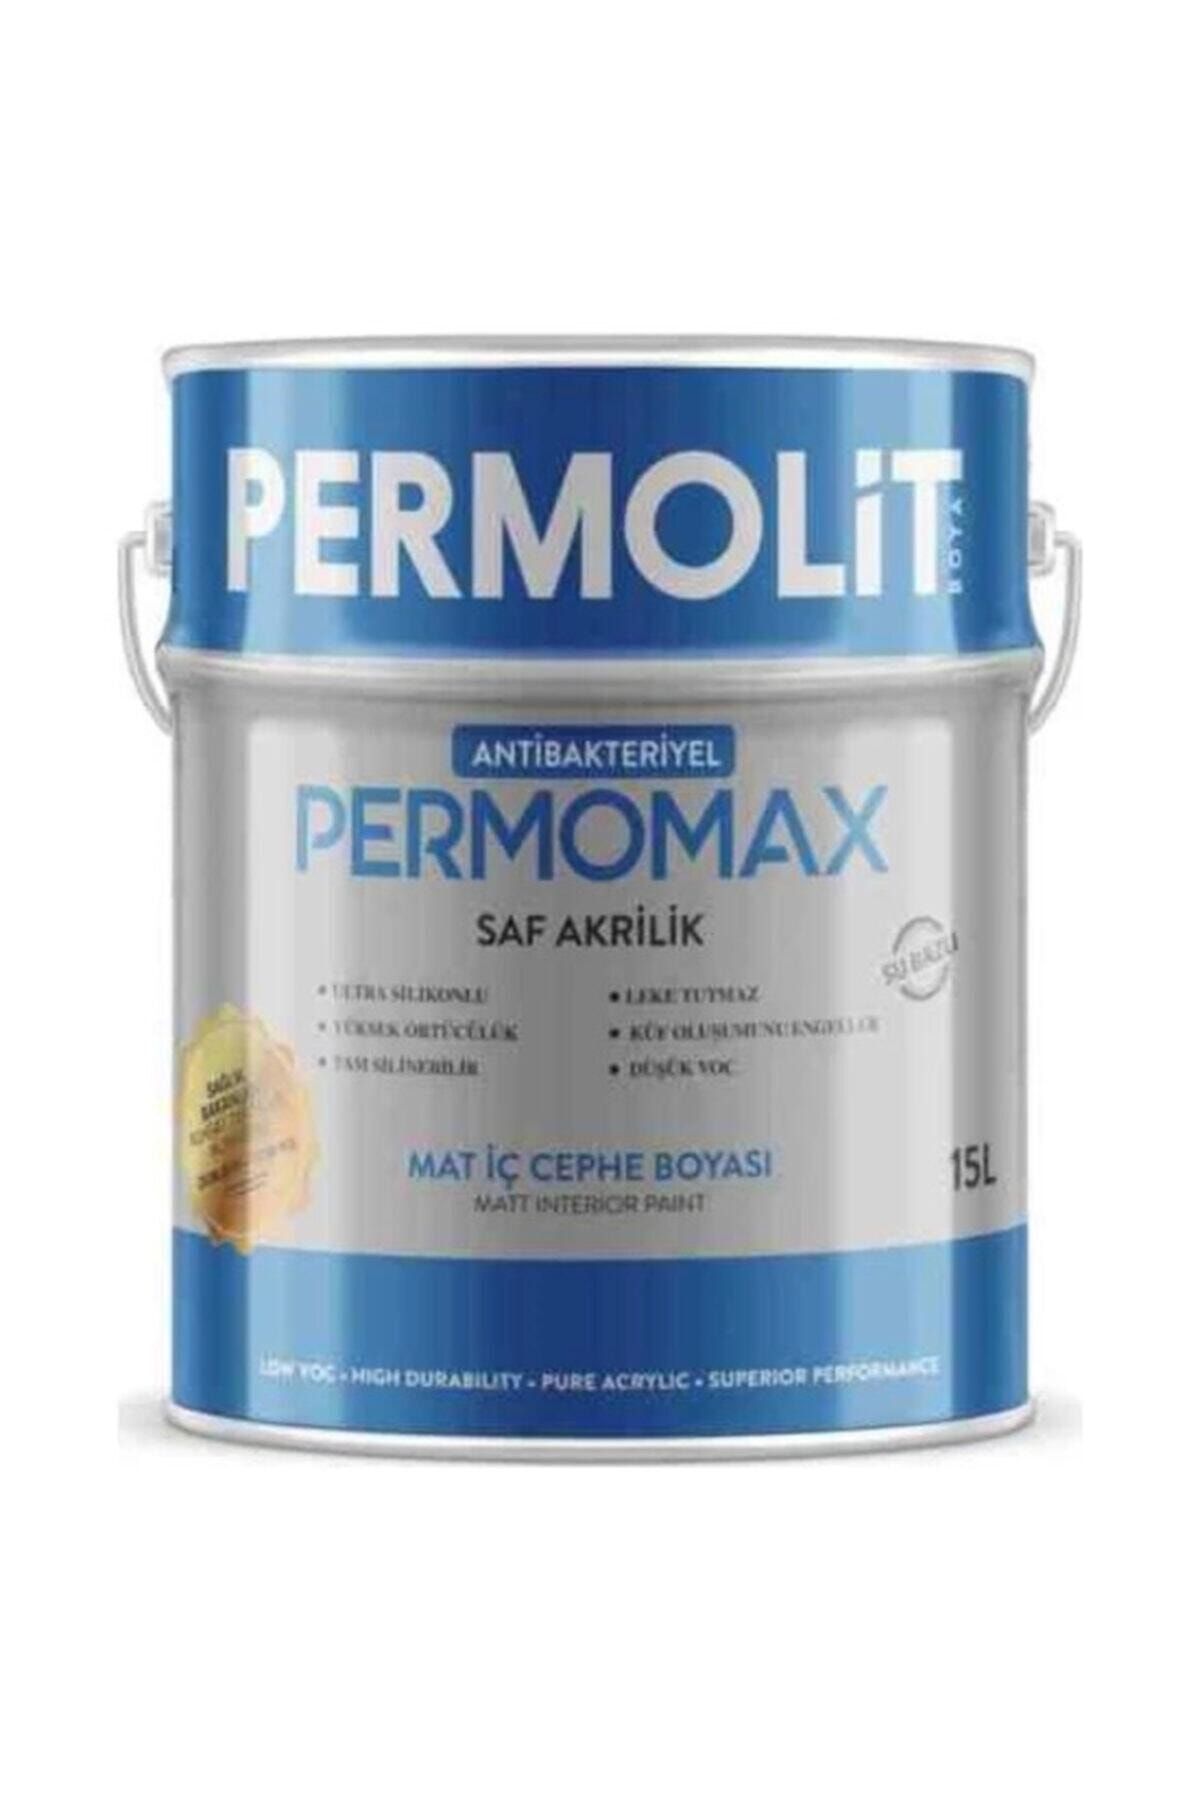 Permolit Permomax Antibakteriyel Mat Iç Cephe Boyası 15 Lt